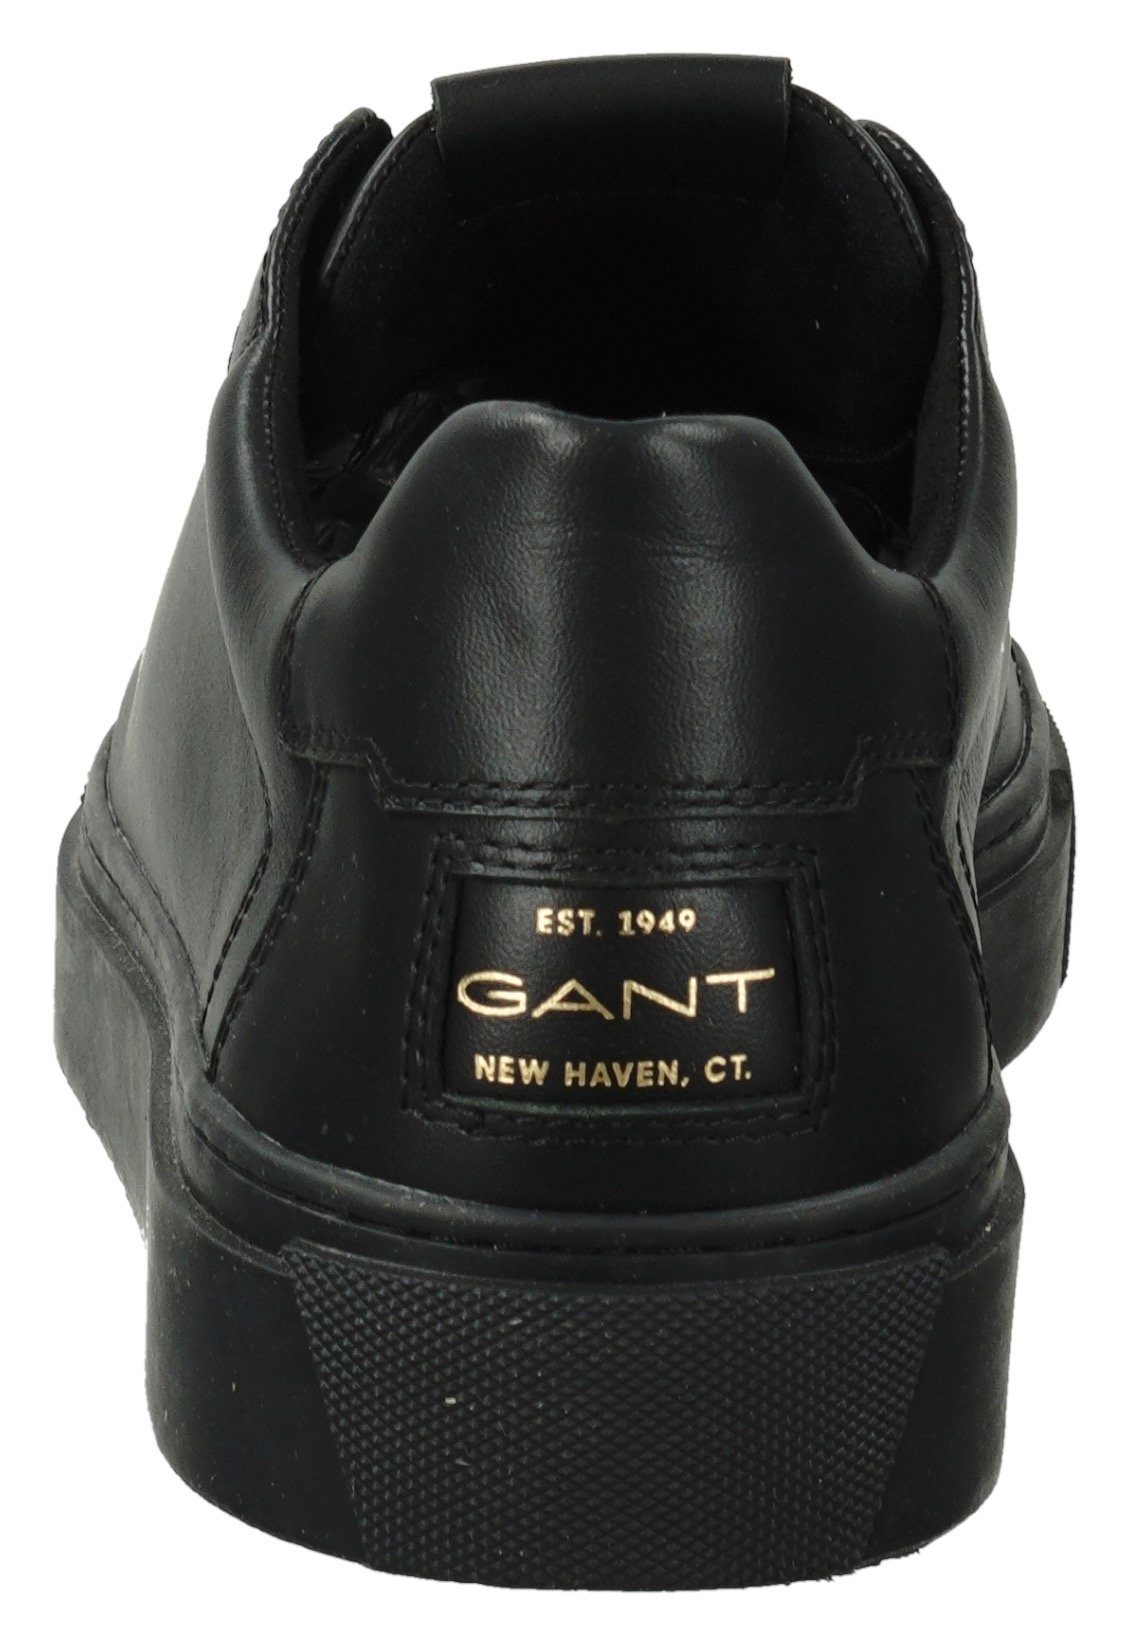 JULIEN Lederinnensohle schwarz-uni Gant Sneaker mit MC